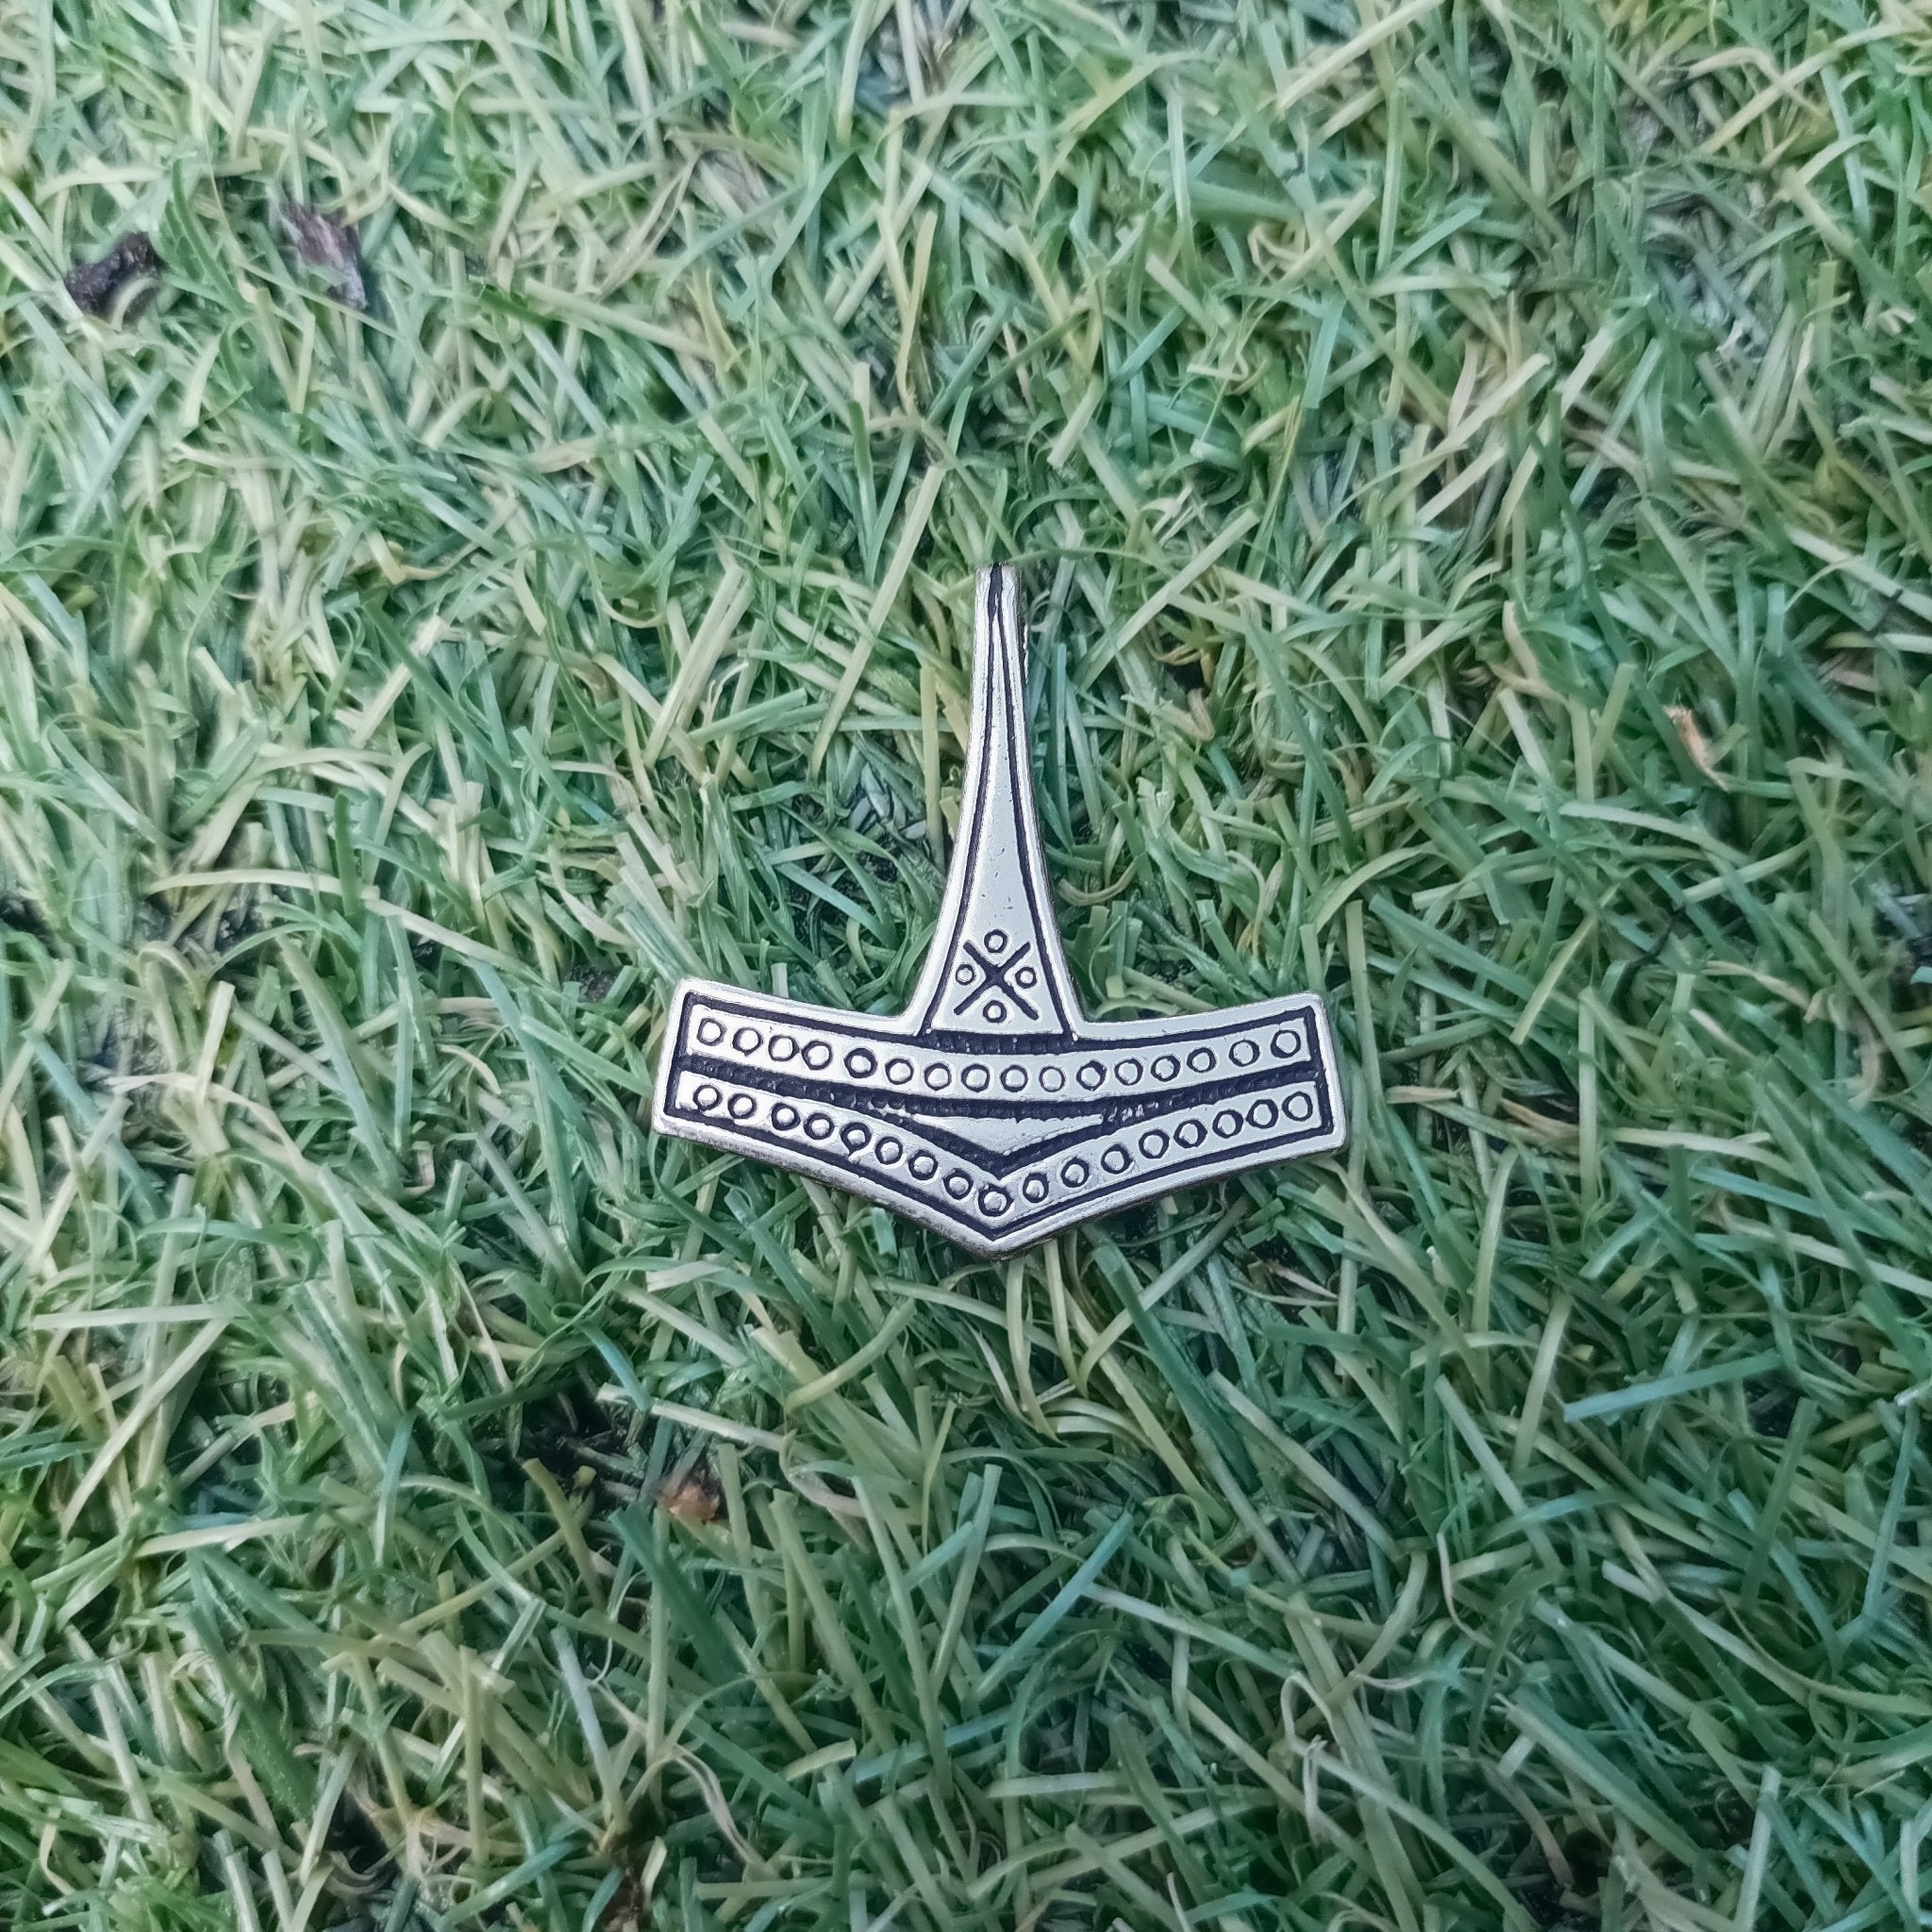 Silver Rømersdal Replica Thors Hammer Pendant on Grass